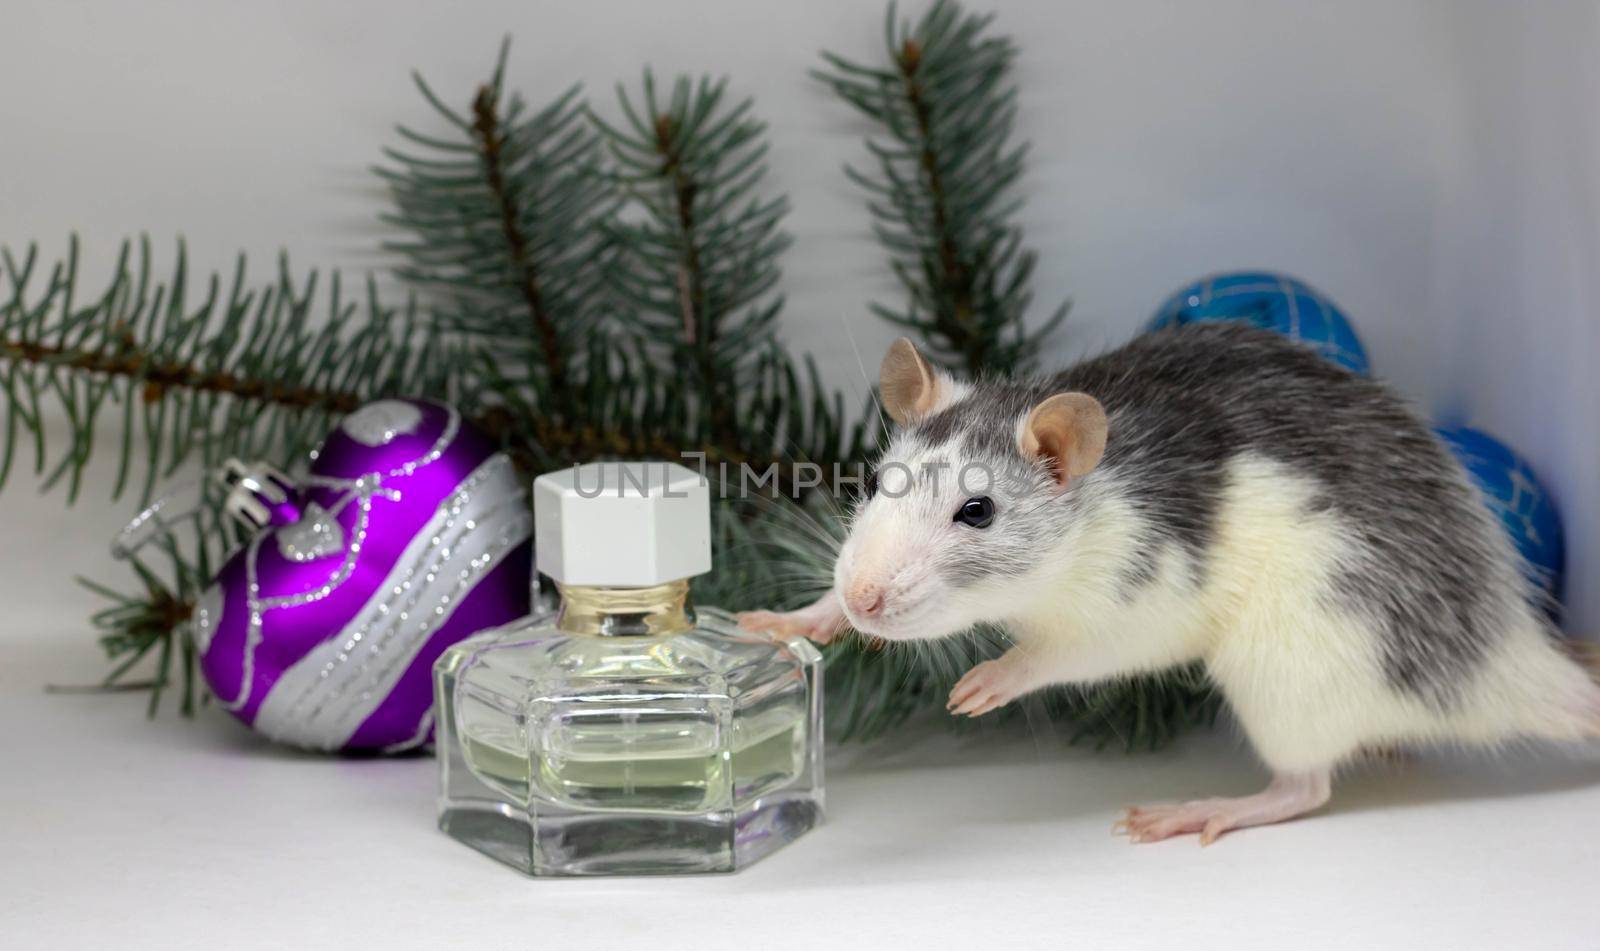 Silver rat on white background sitting a round a perfume bottle. by lapushka62